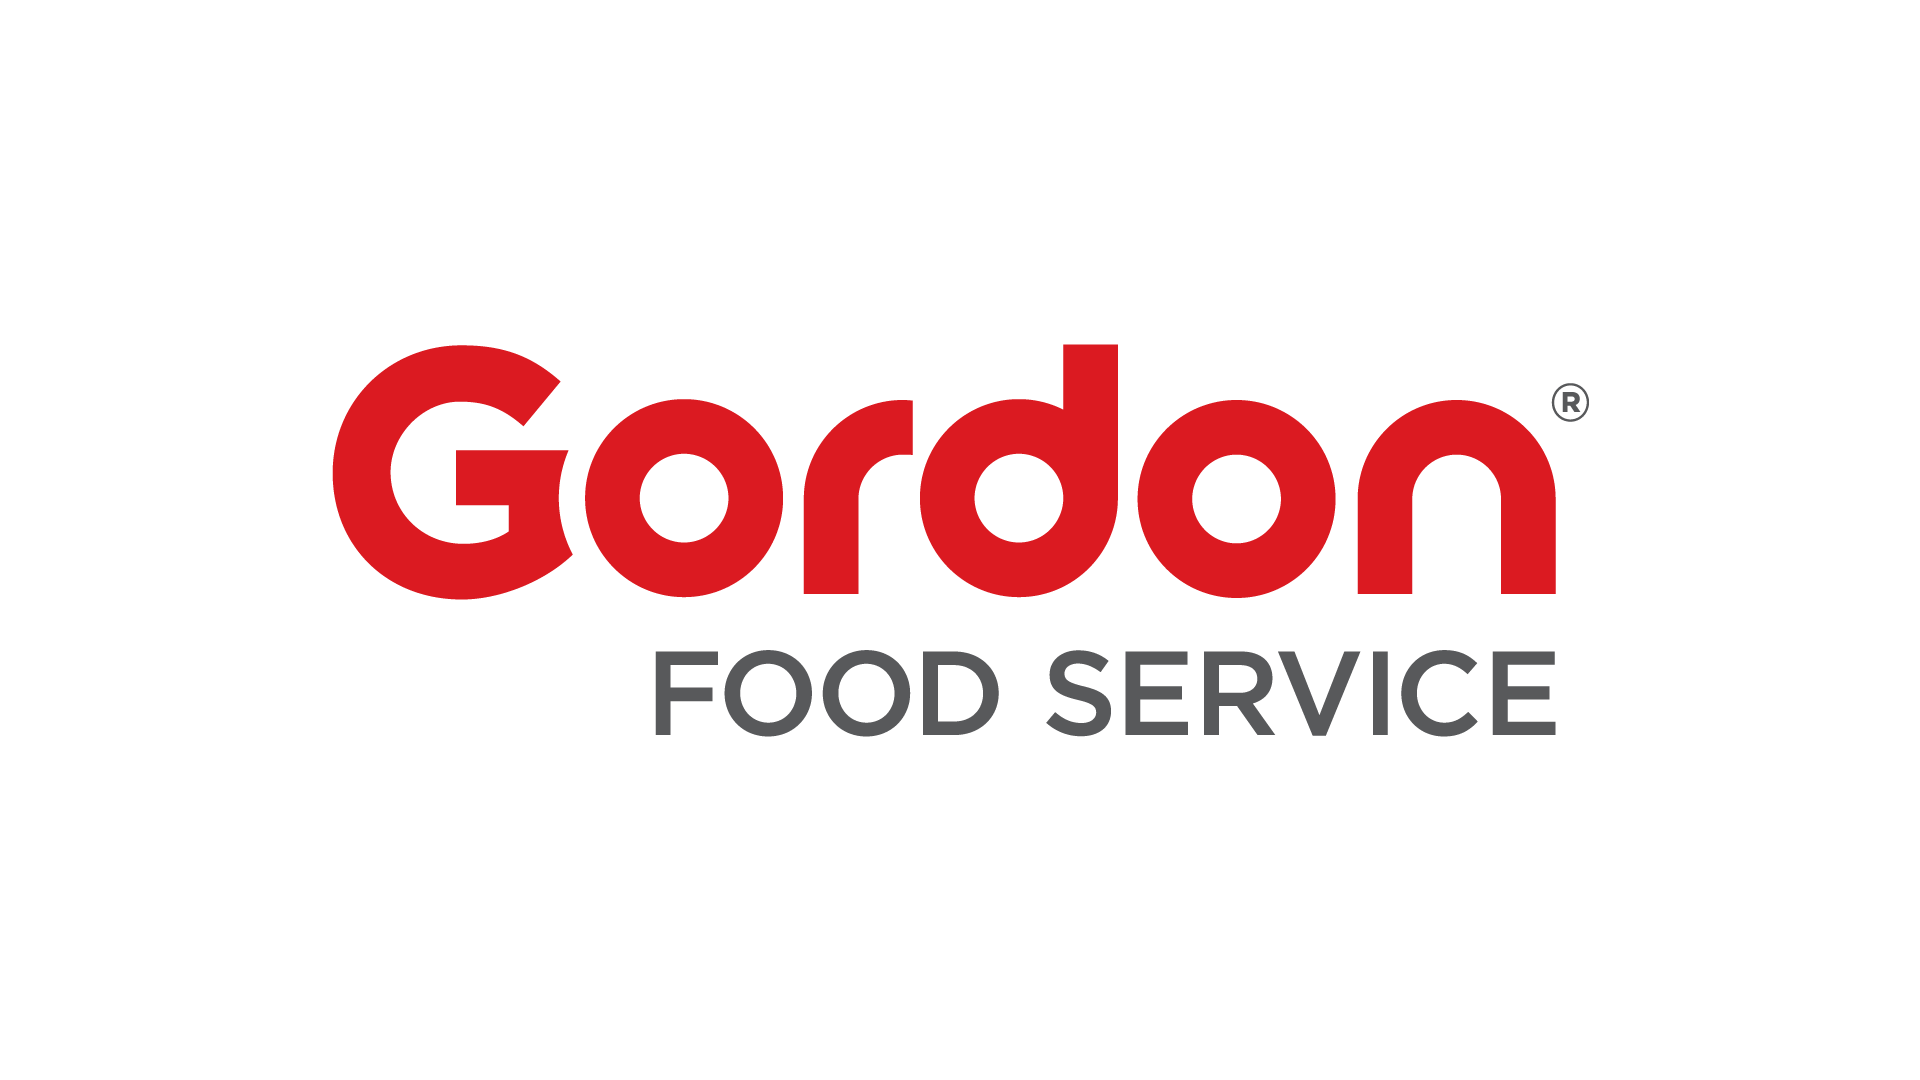 Gordon Food Service Gordon Food Service